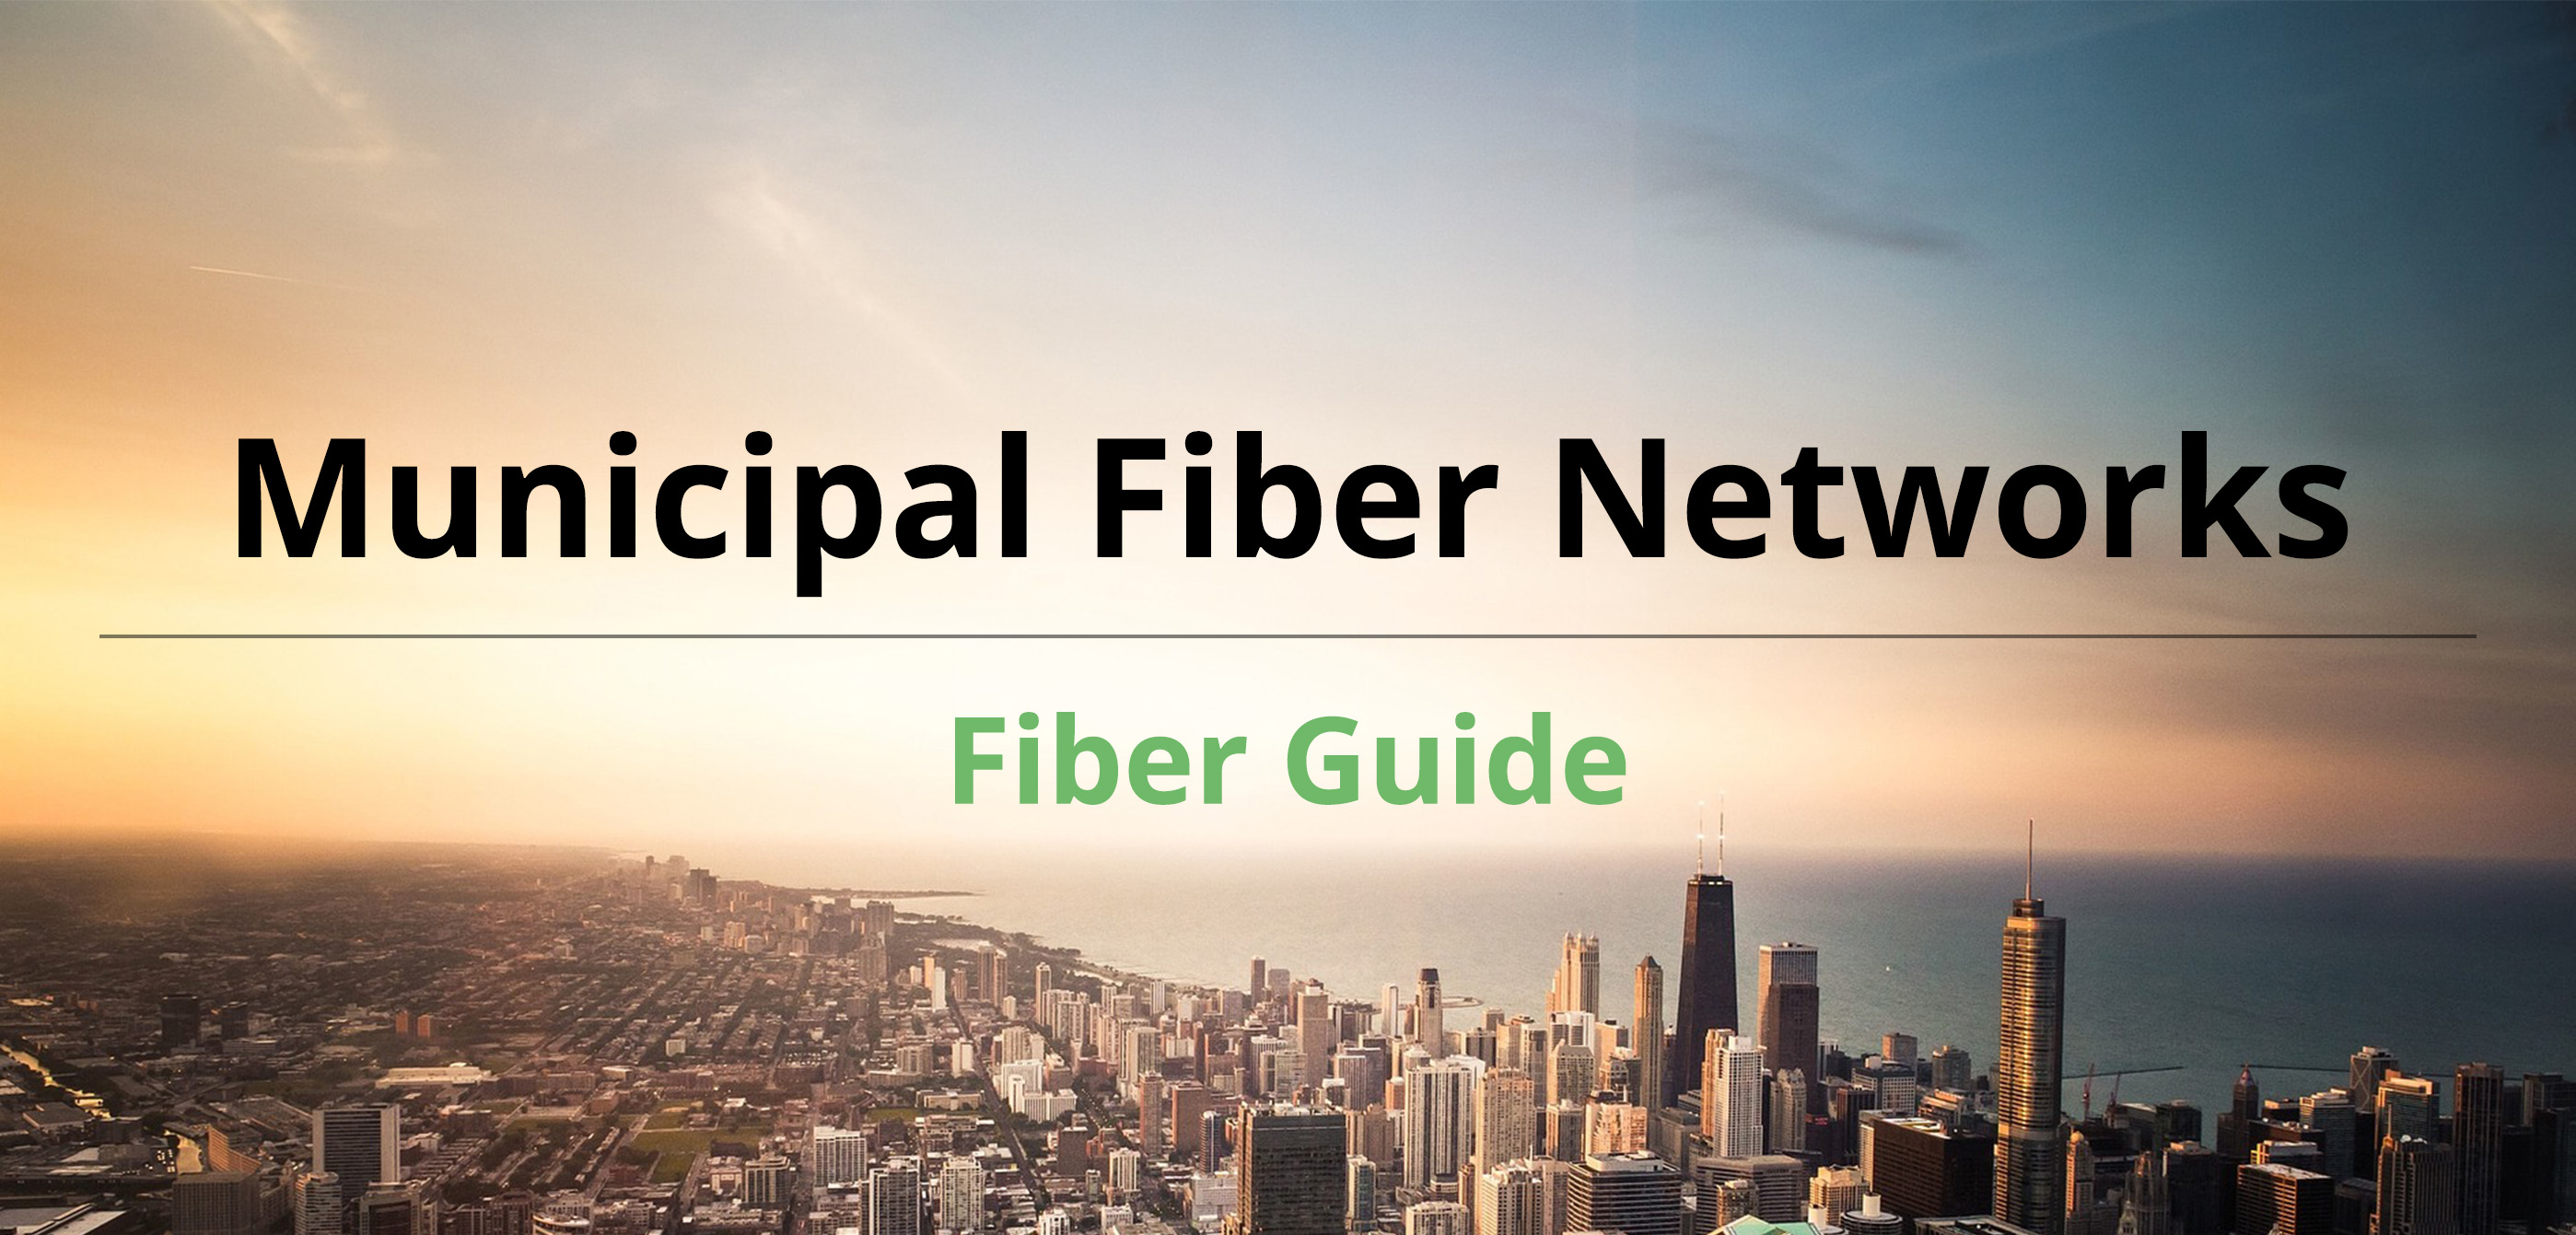 Fiber Guide_Municipal Fiber Networks_Landing page_Featured image